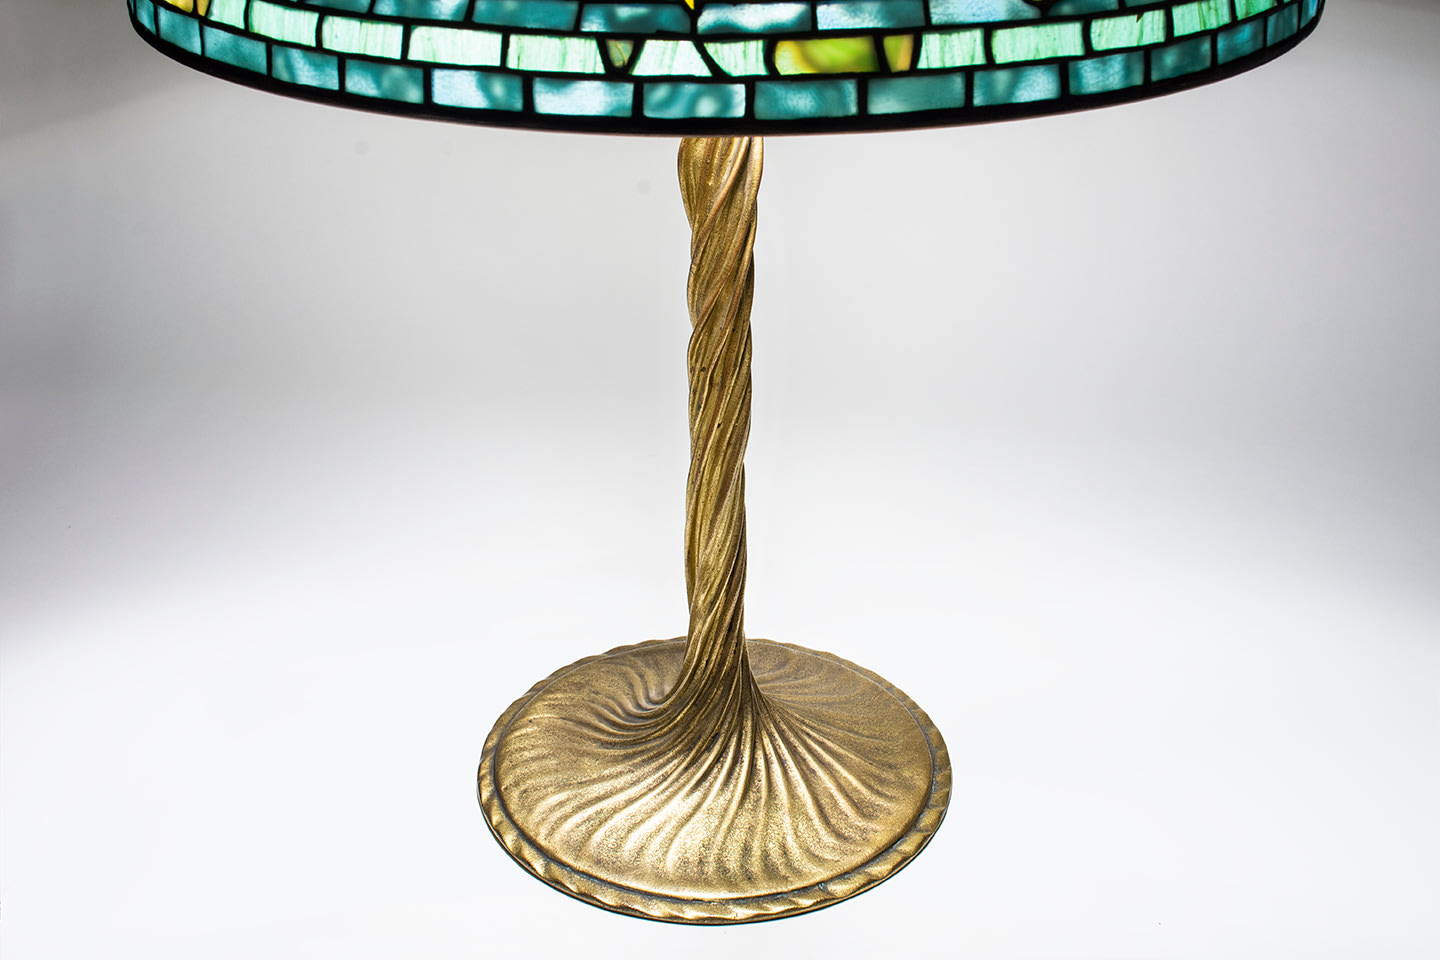 Daffodil Table Lamp